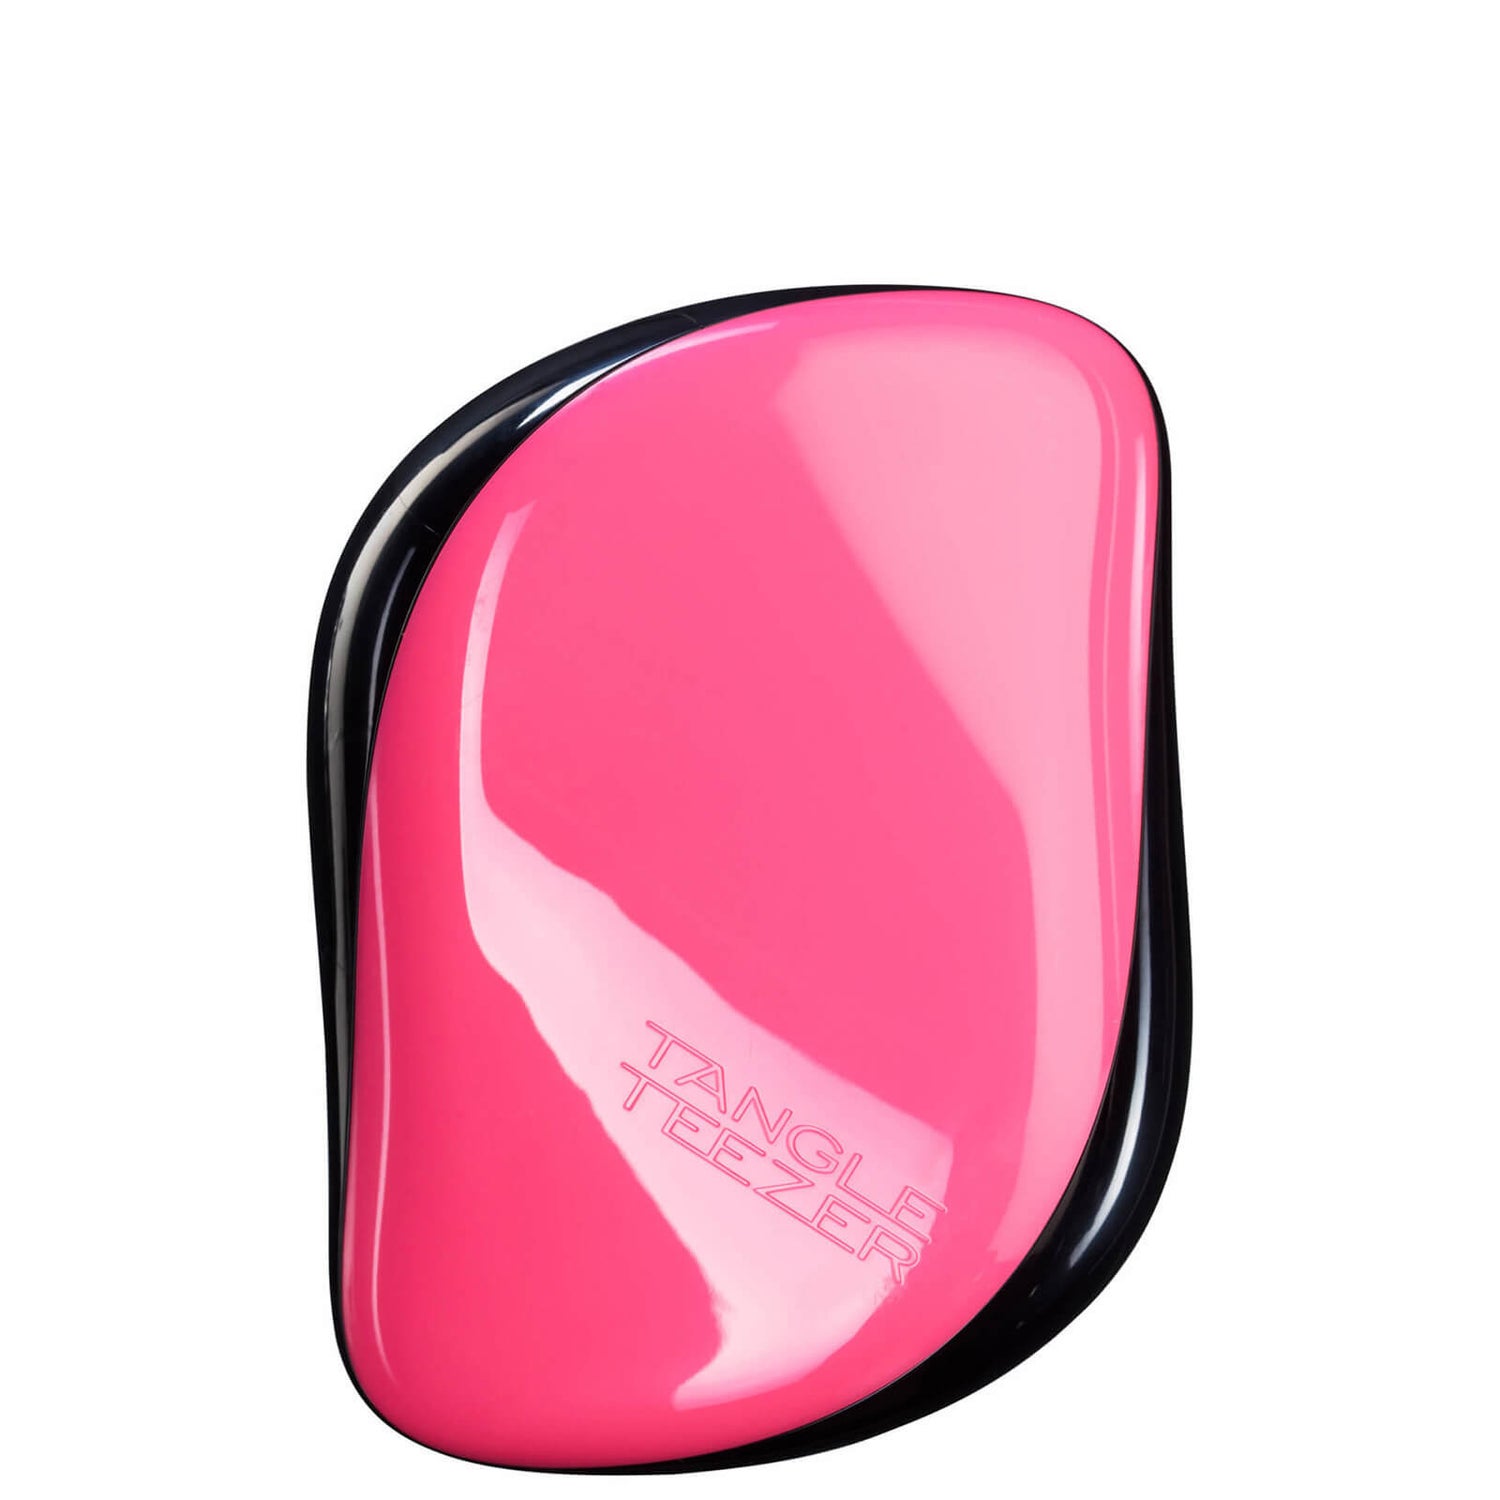 Escova Compact Styler da Tangle Teezer - Pink Sizzle